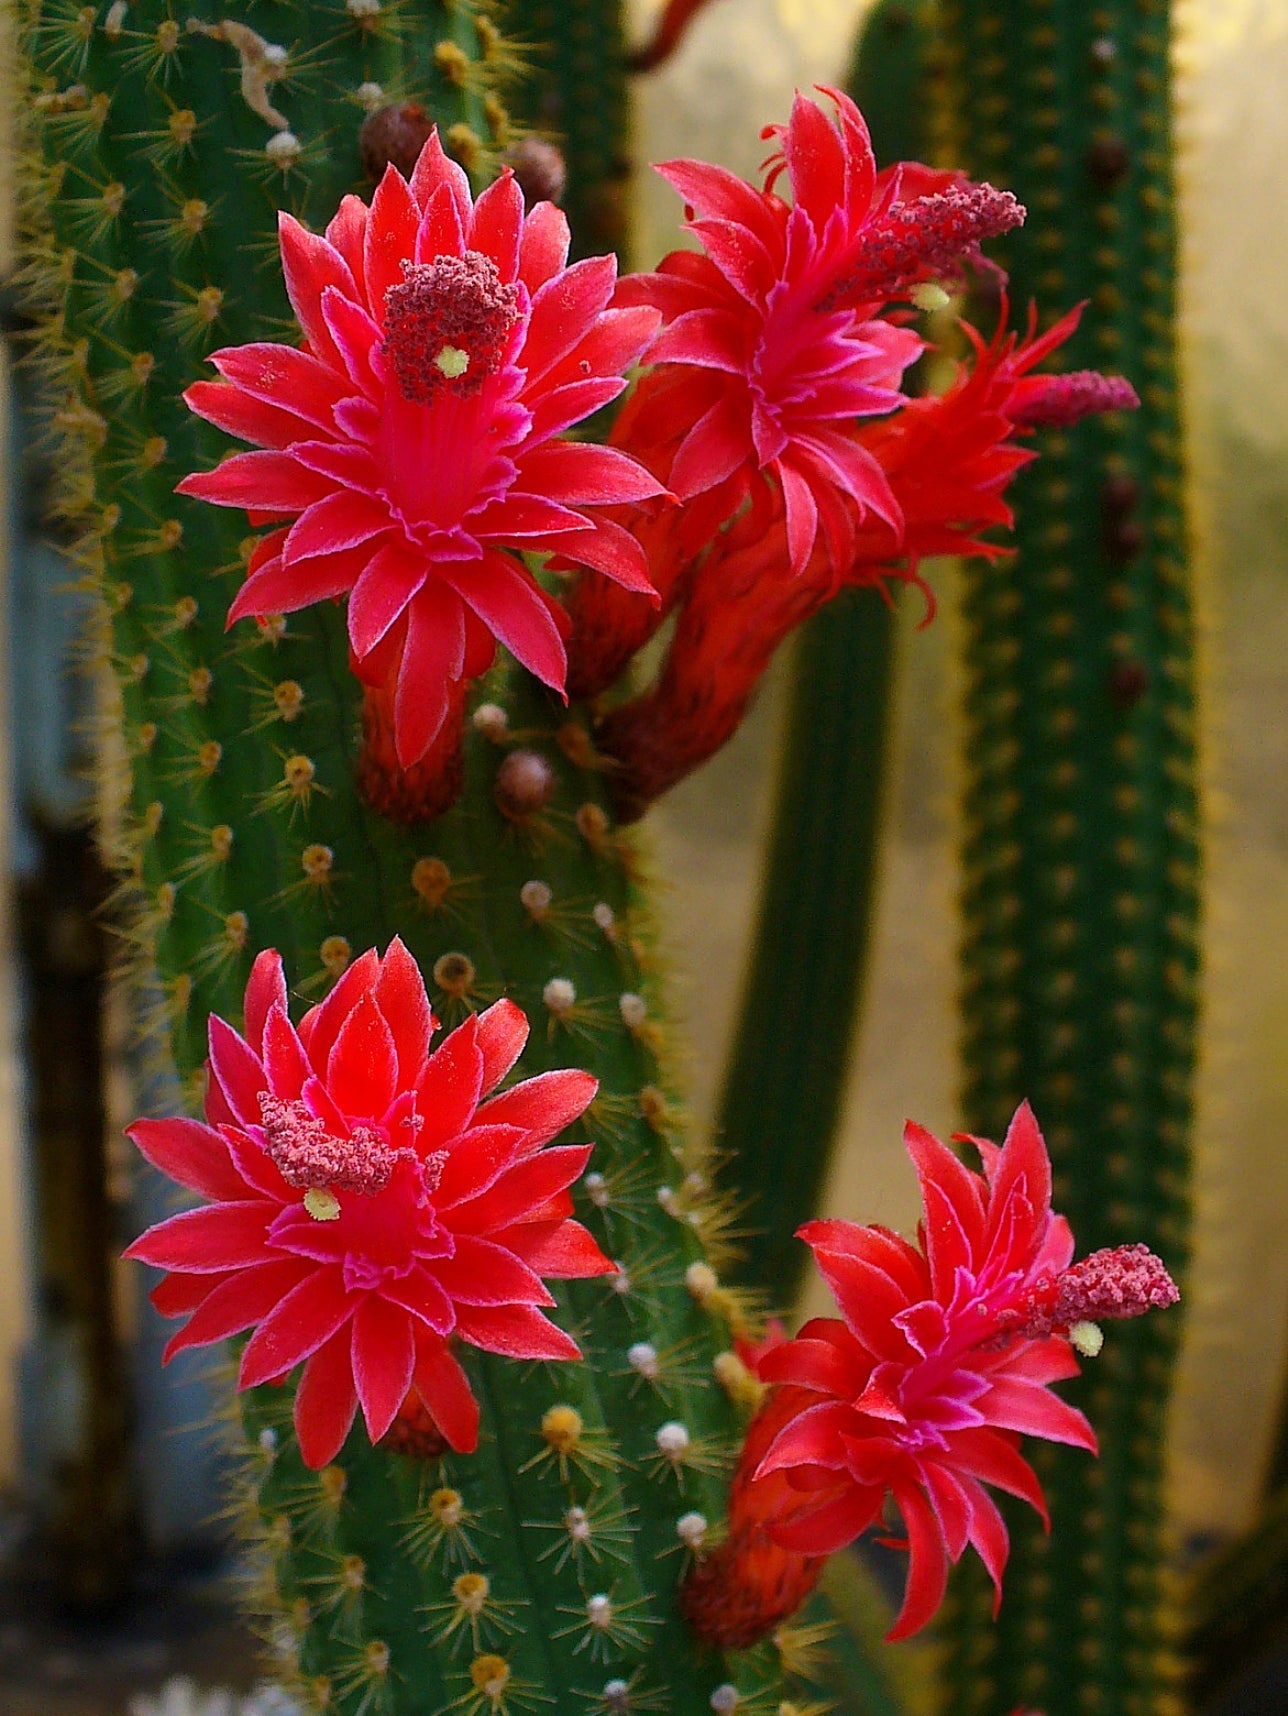 Red Flowered Columnar Cactus  Cleistocactus samaipatanus  200 Seeds  USA Company